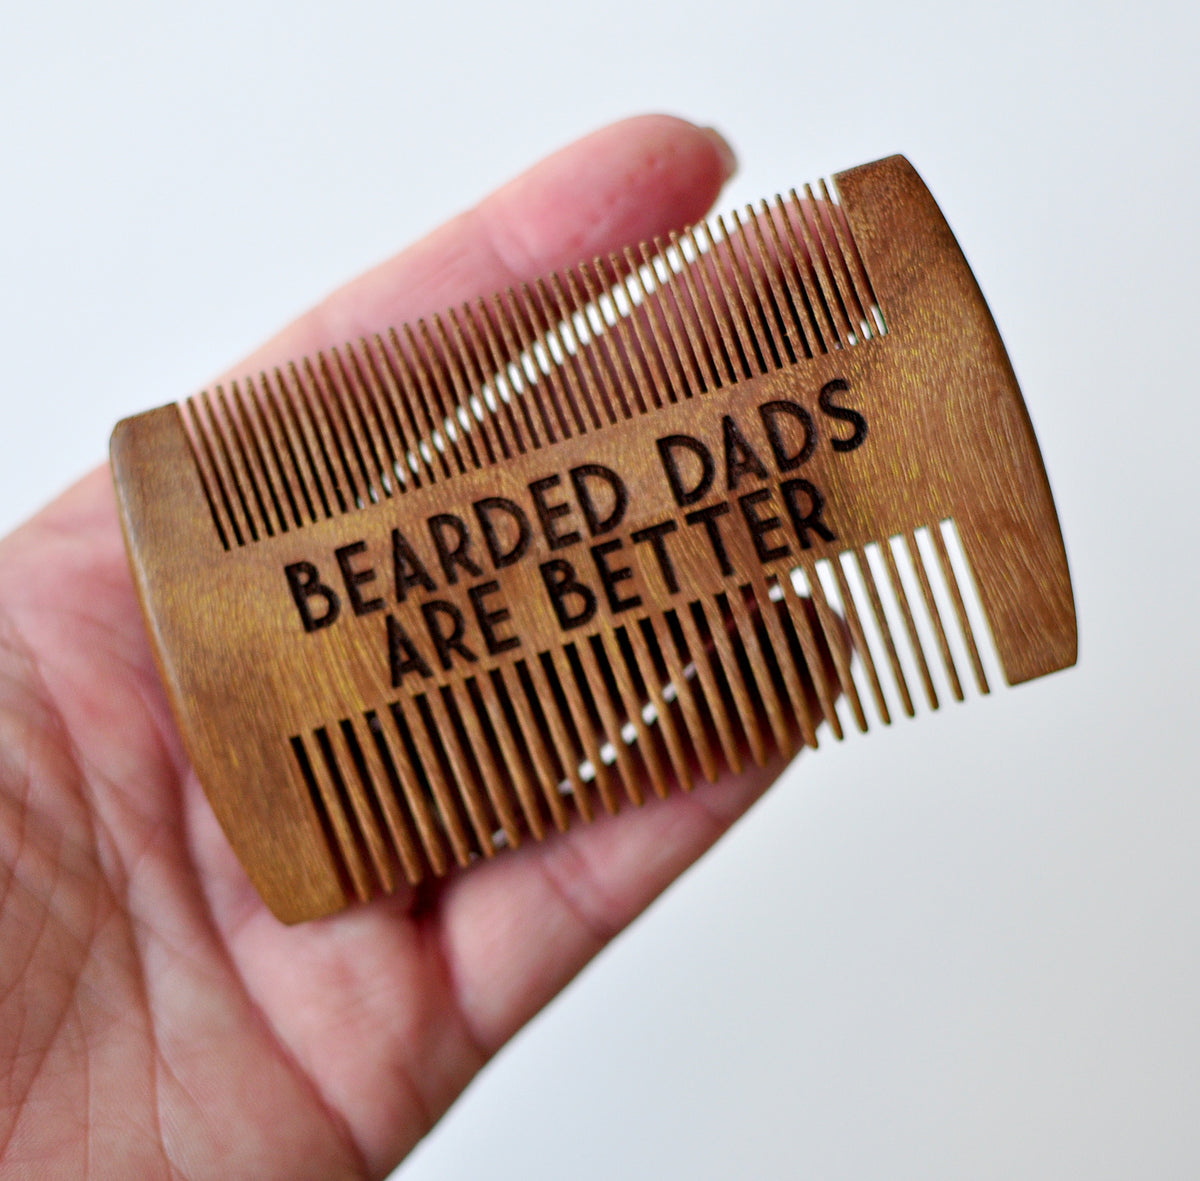 Sandalwood Beard Comb - Bearded Dads are Better